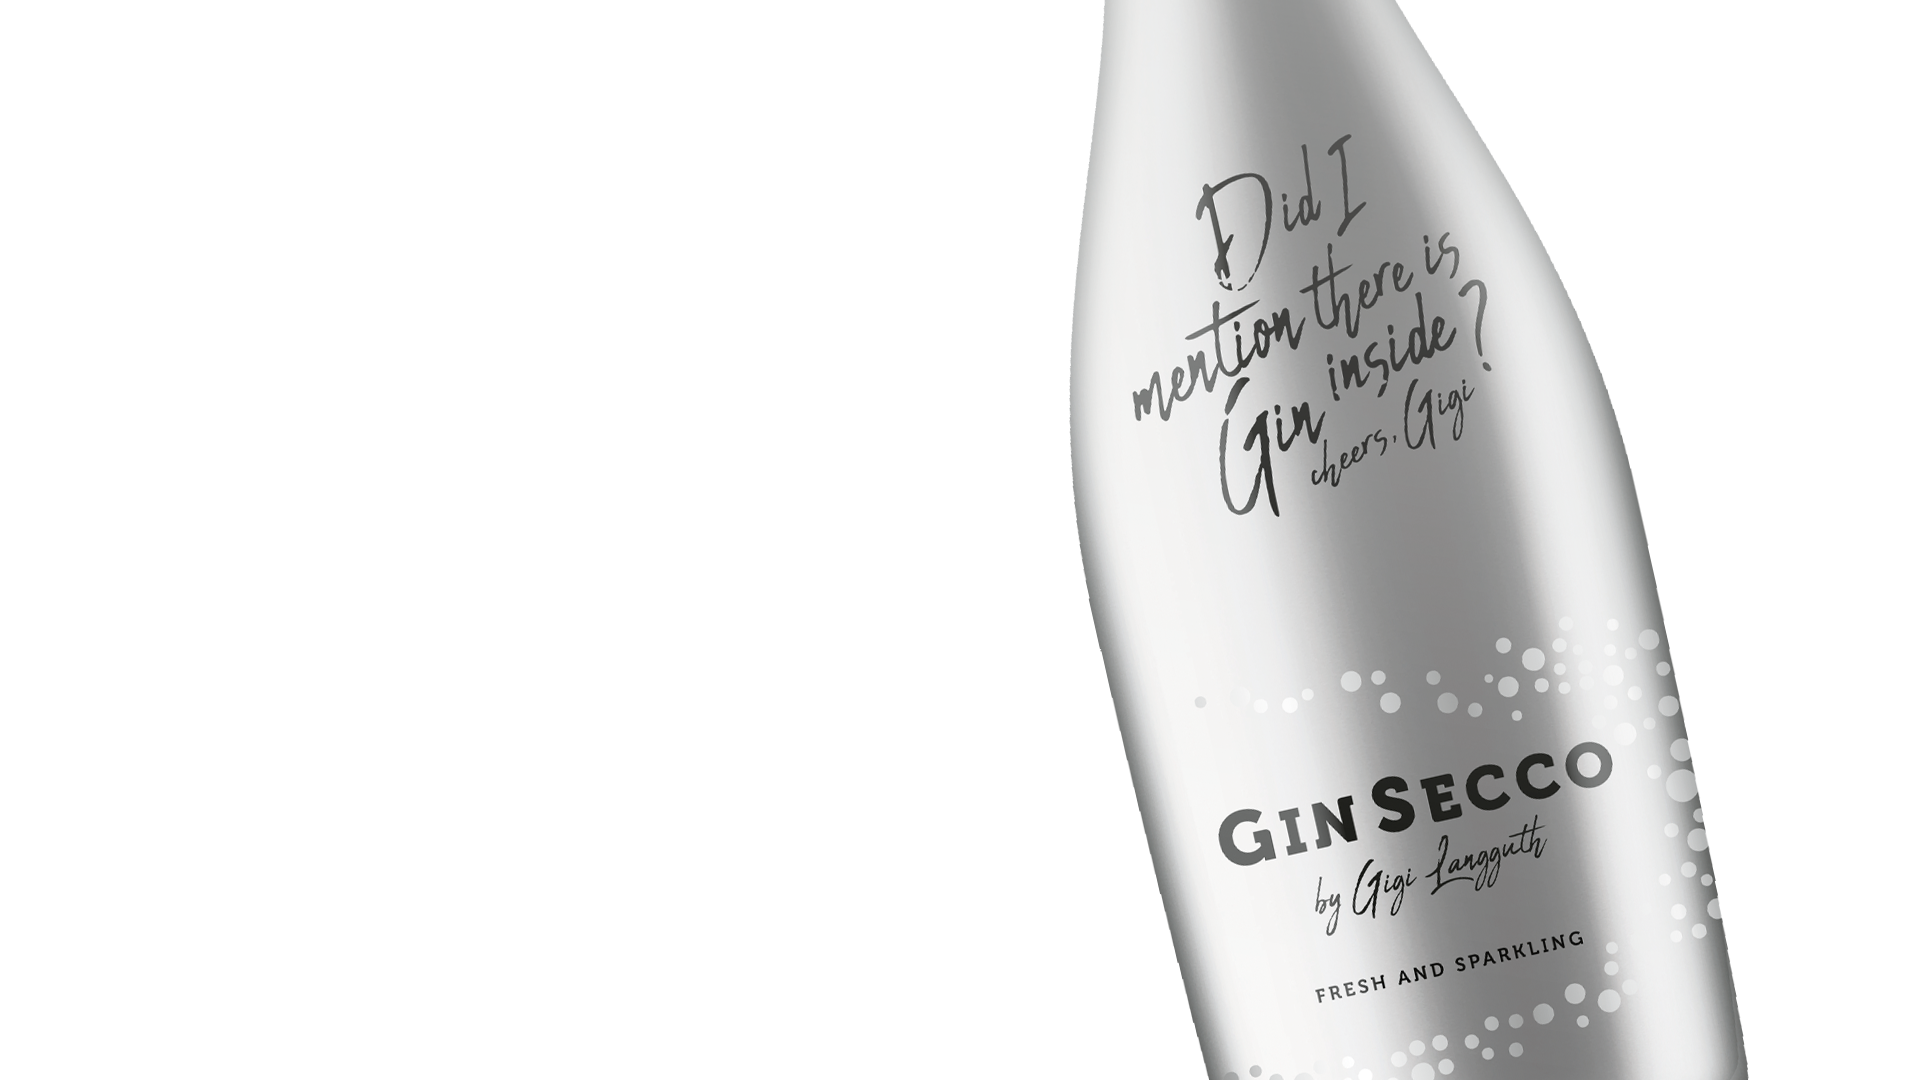 GIN SECCO by Gigi Langguth - Gin & Secco.